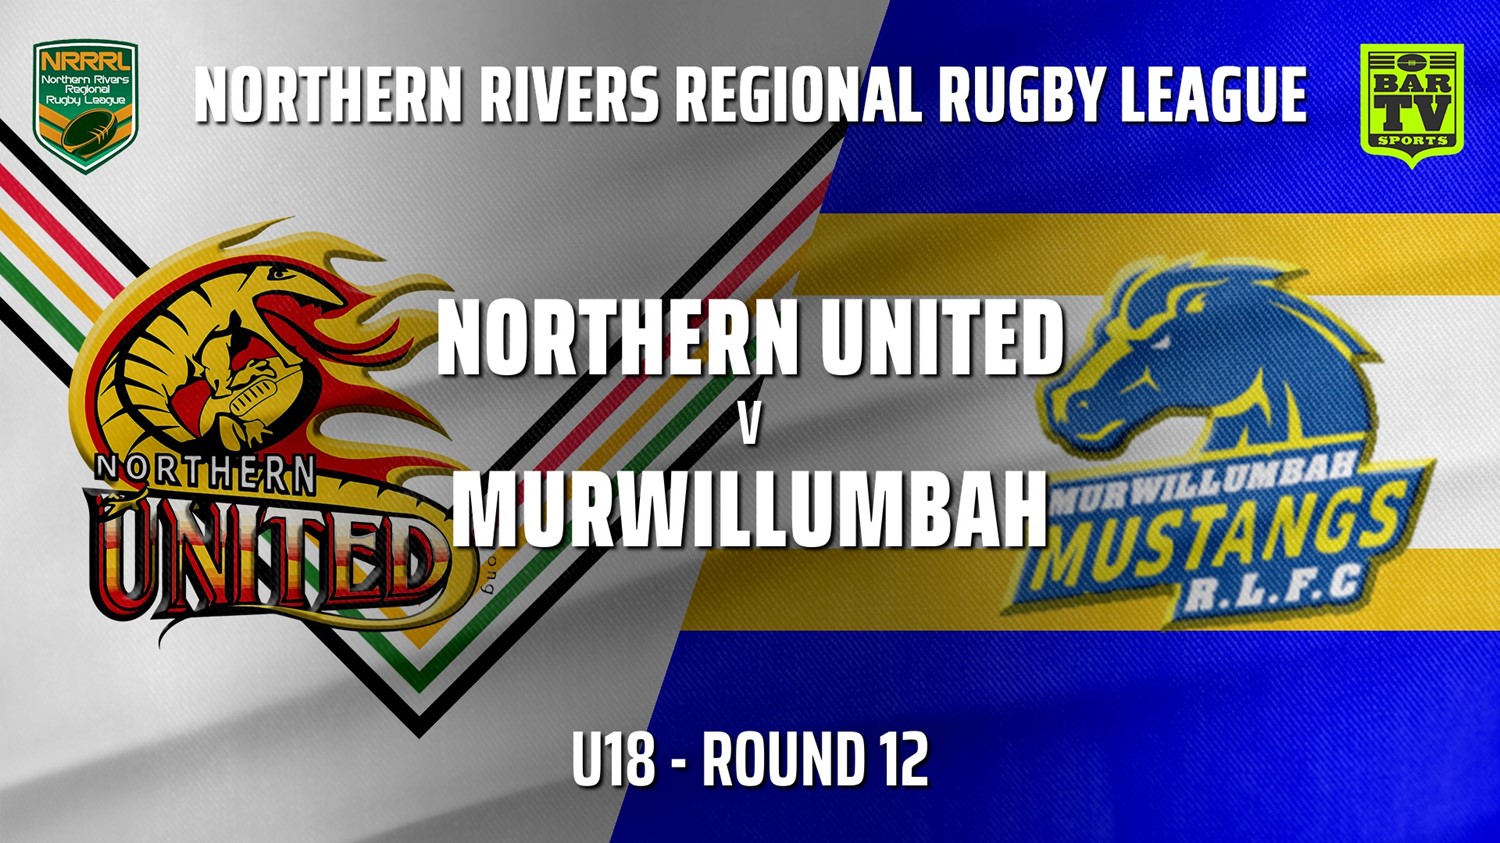 210724-Northern Rivers Round 12 - U18 - Northern United v Murwillumbah Mustangs Slate Image